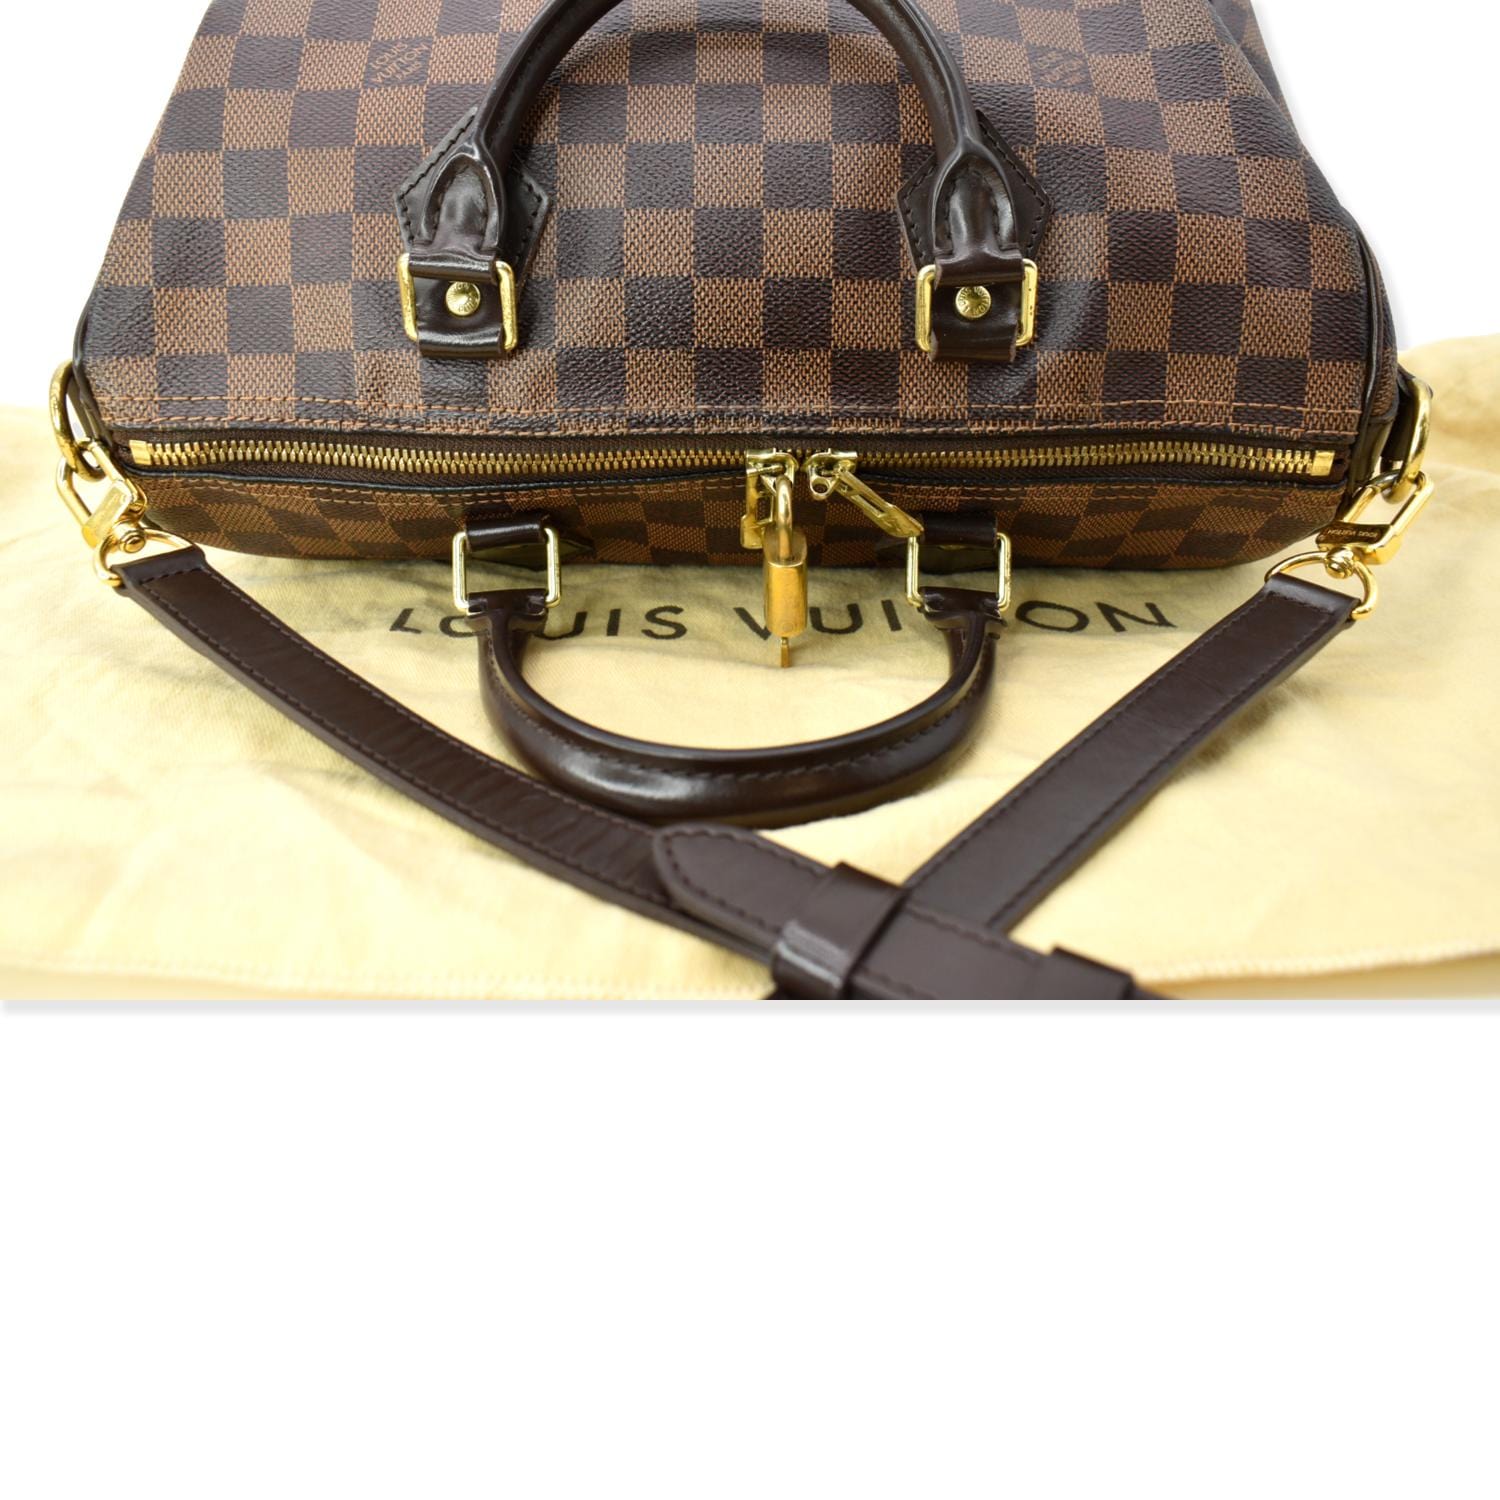 Authentic Louis Vuitton Damier Ebene Speedy 30 Handbag